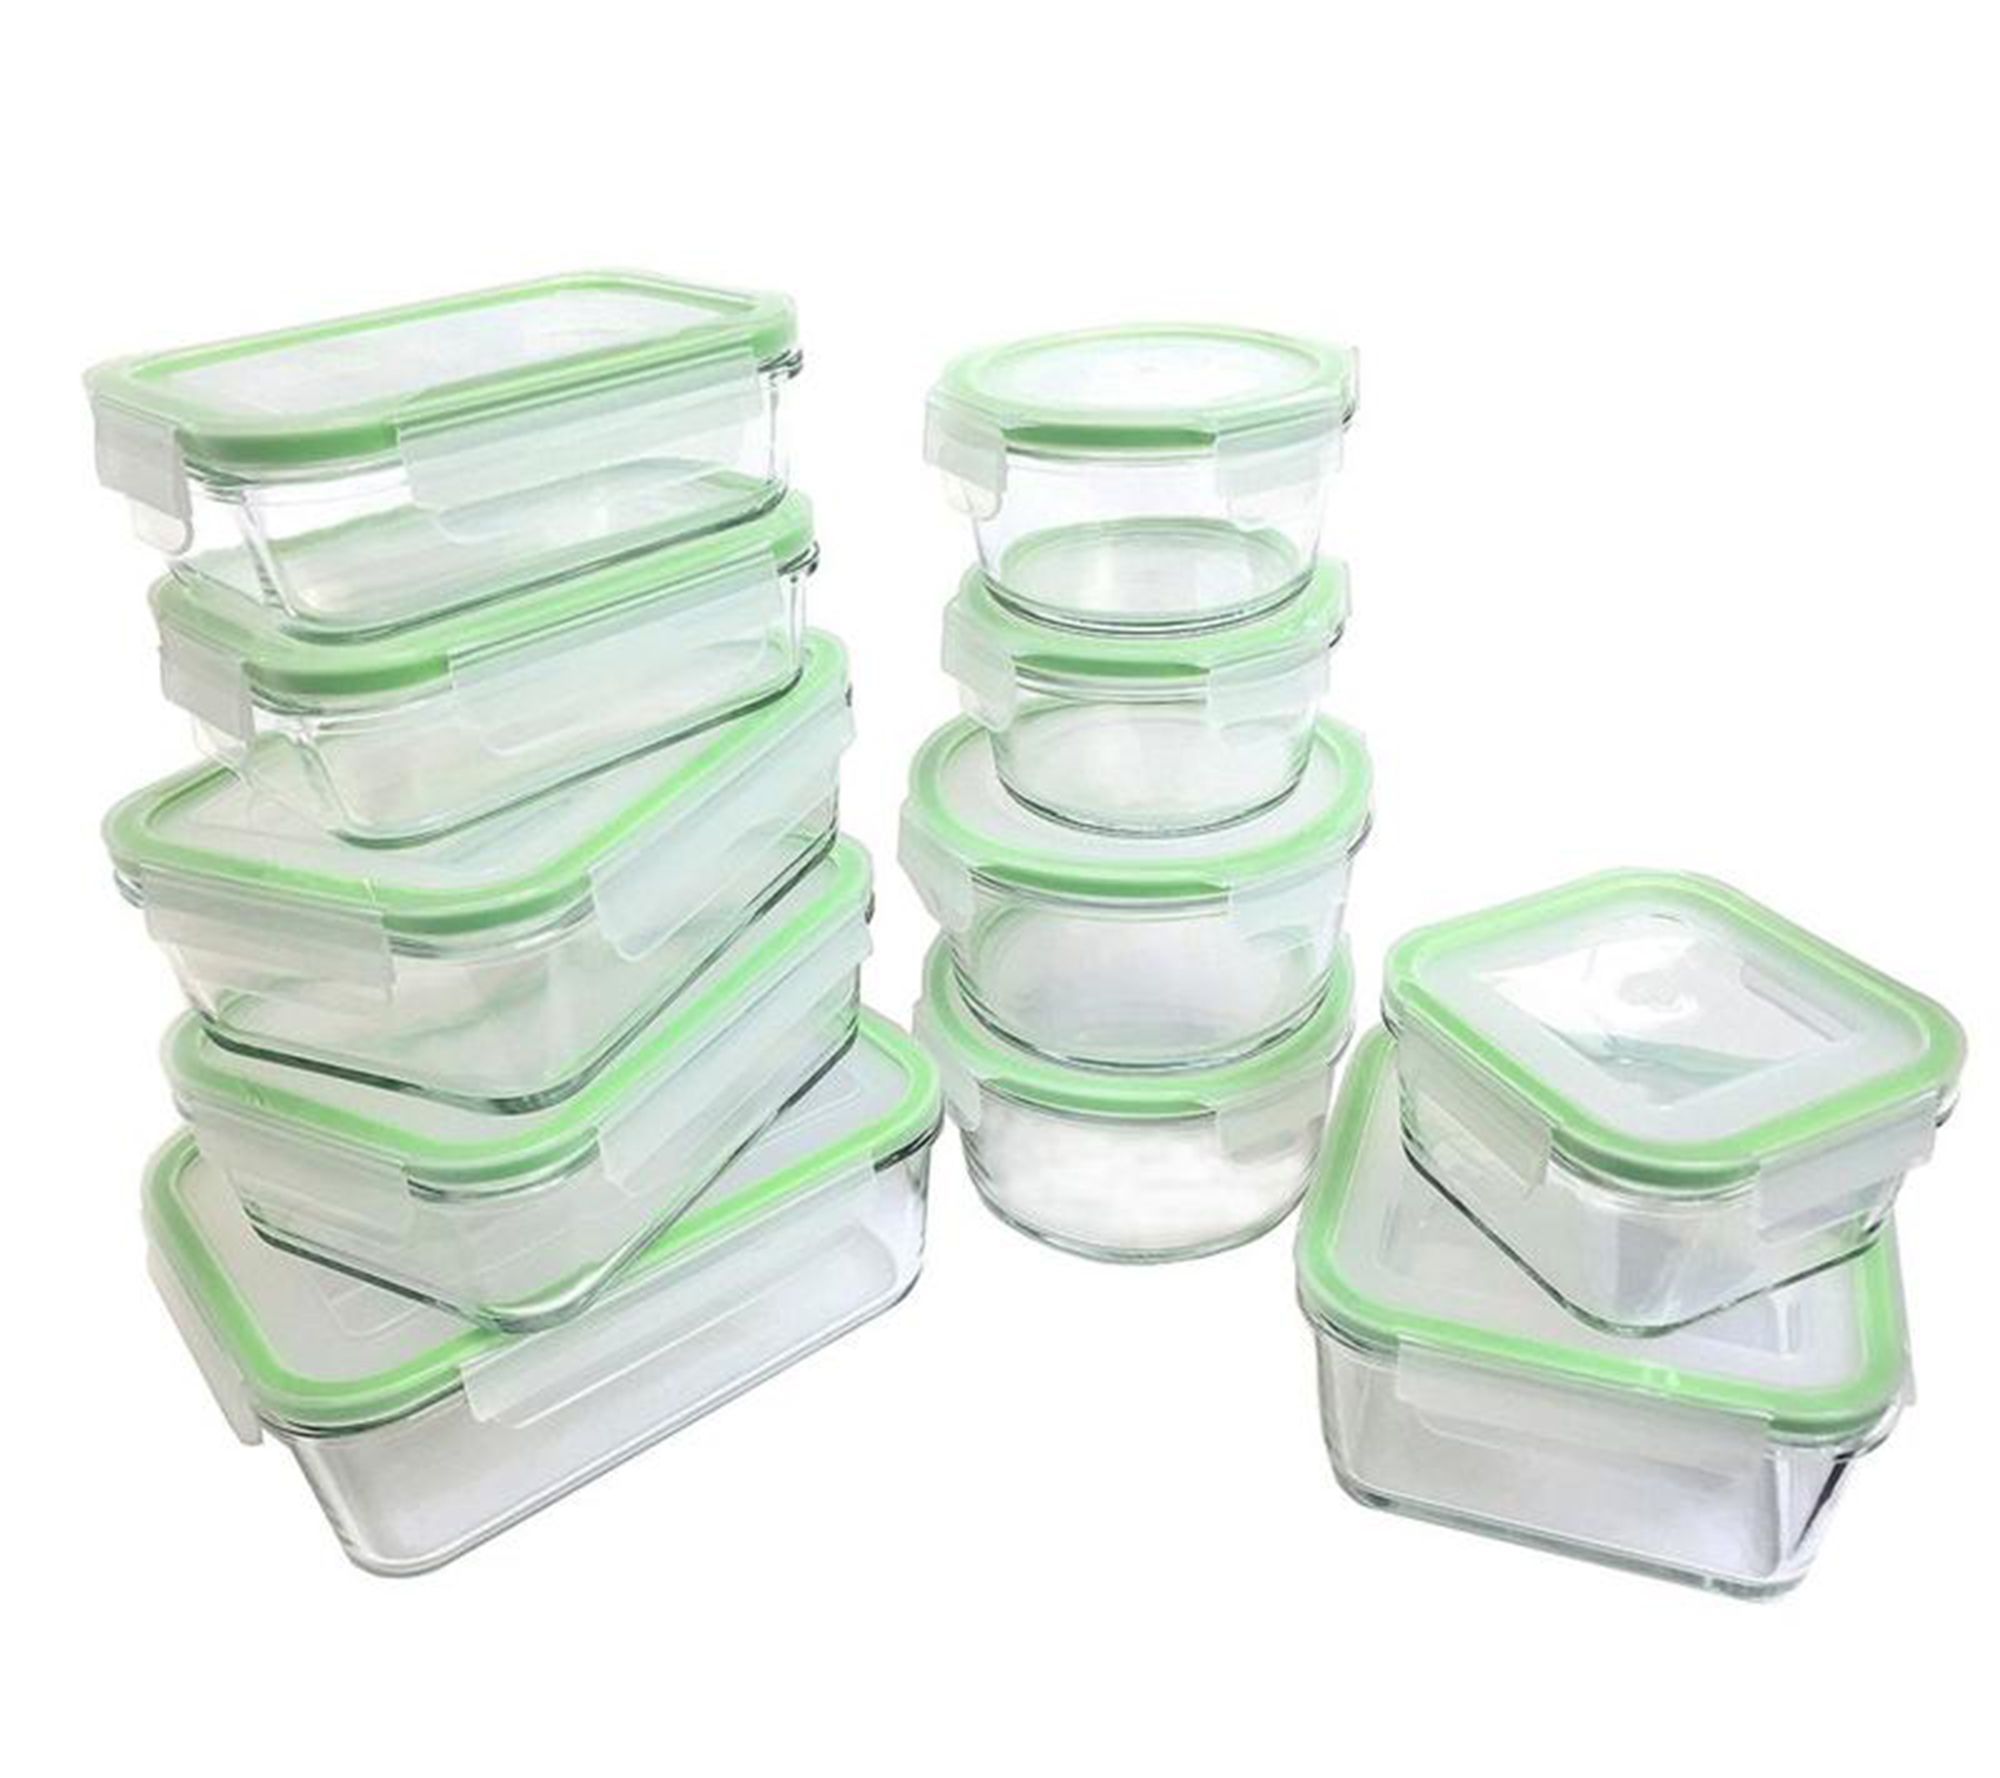 Glasslock 16-Piece Round Shape Glass Food Storage Set